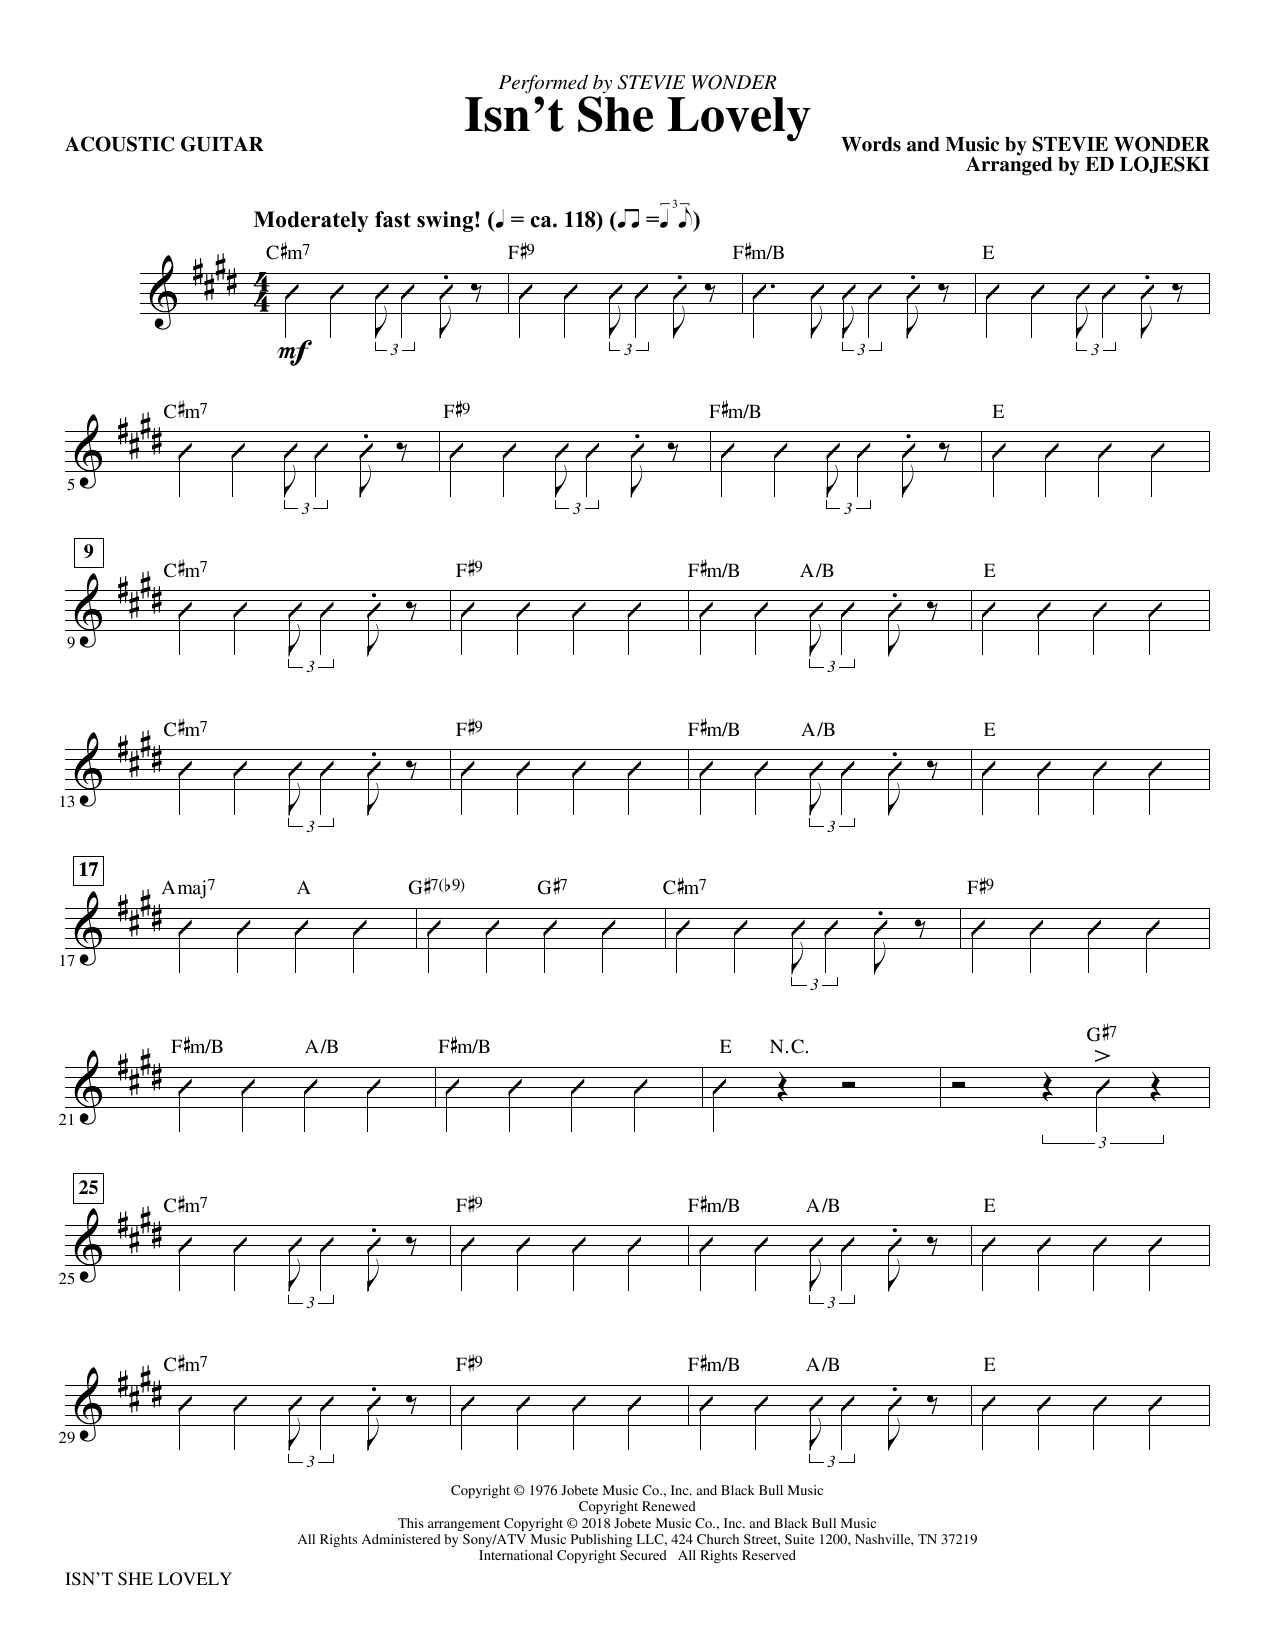 Stevie Wonder Isn T She Lovely Acoustic Guitar Sheet Music Notes Download Printable Pdf